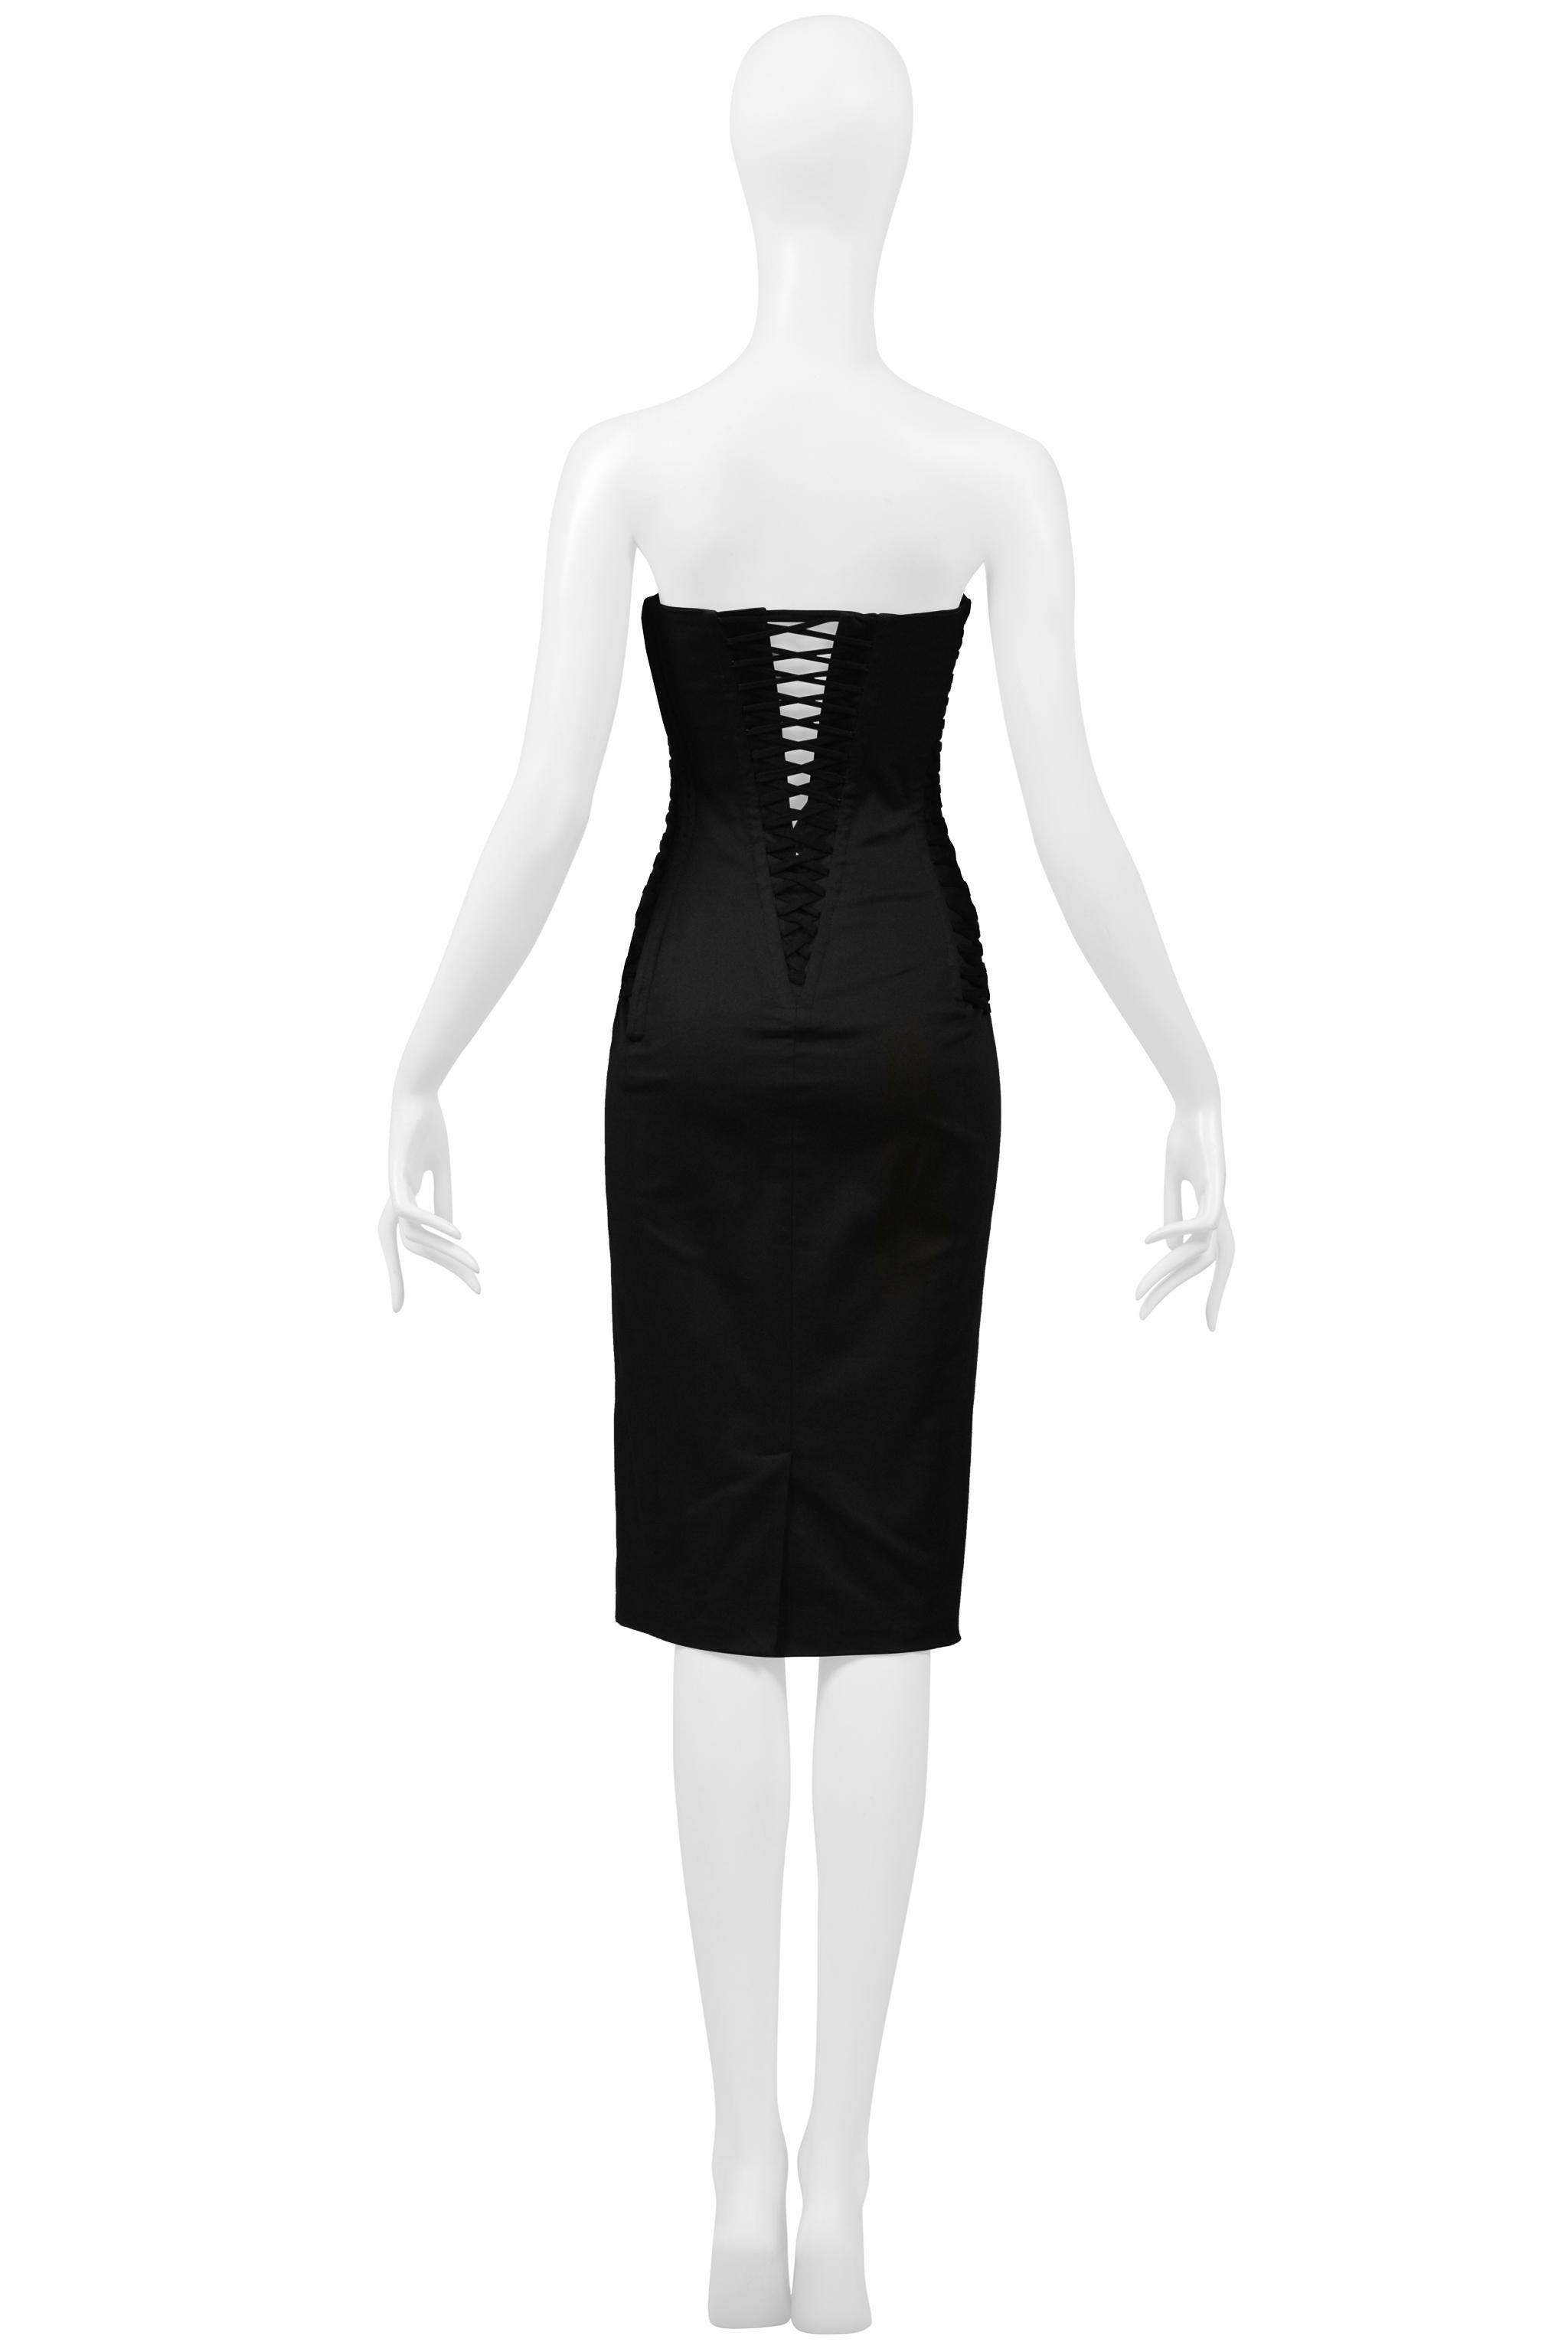 Dolce & Gabbana Black Strapless Corset Dress 2002 For Sale 1